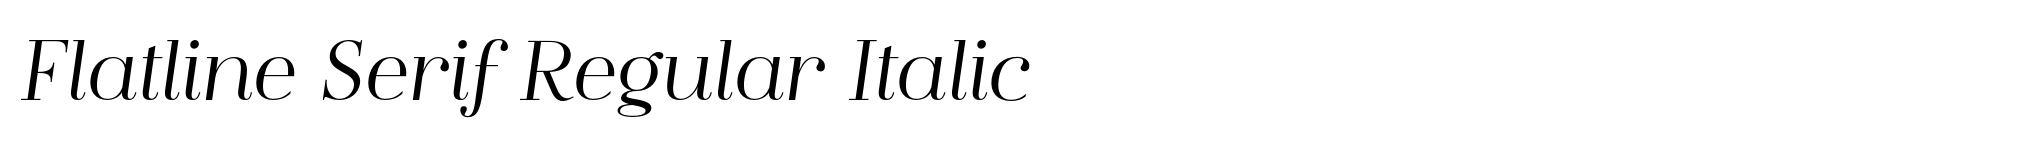 Flatline Serif Regular Italic image